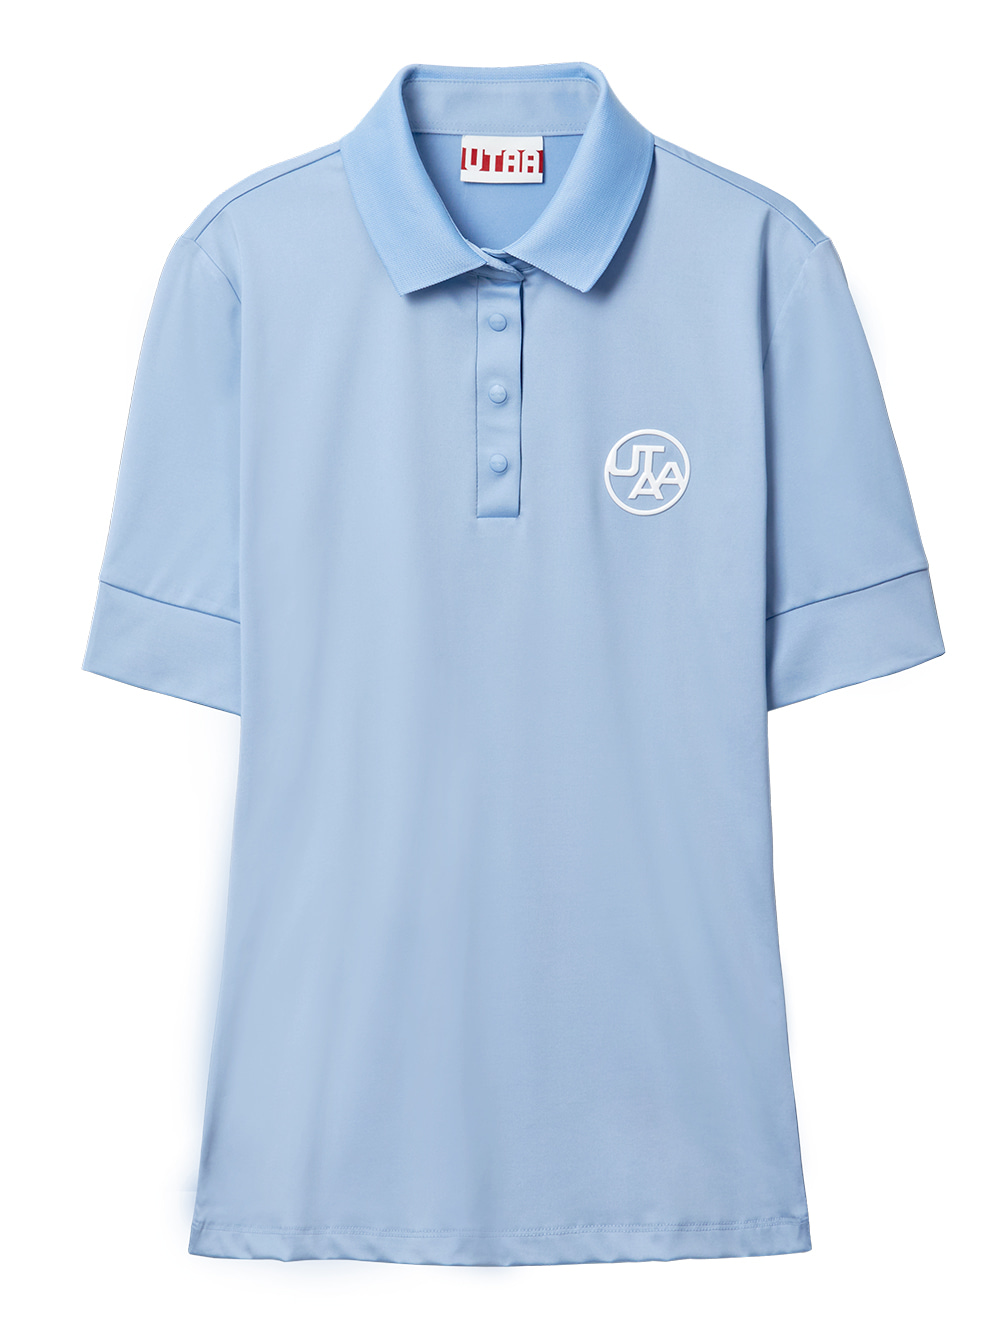 UTAA Swing Fit Emblem Polo T-Shirts : Women&#039;s (UA2TSF233LB)